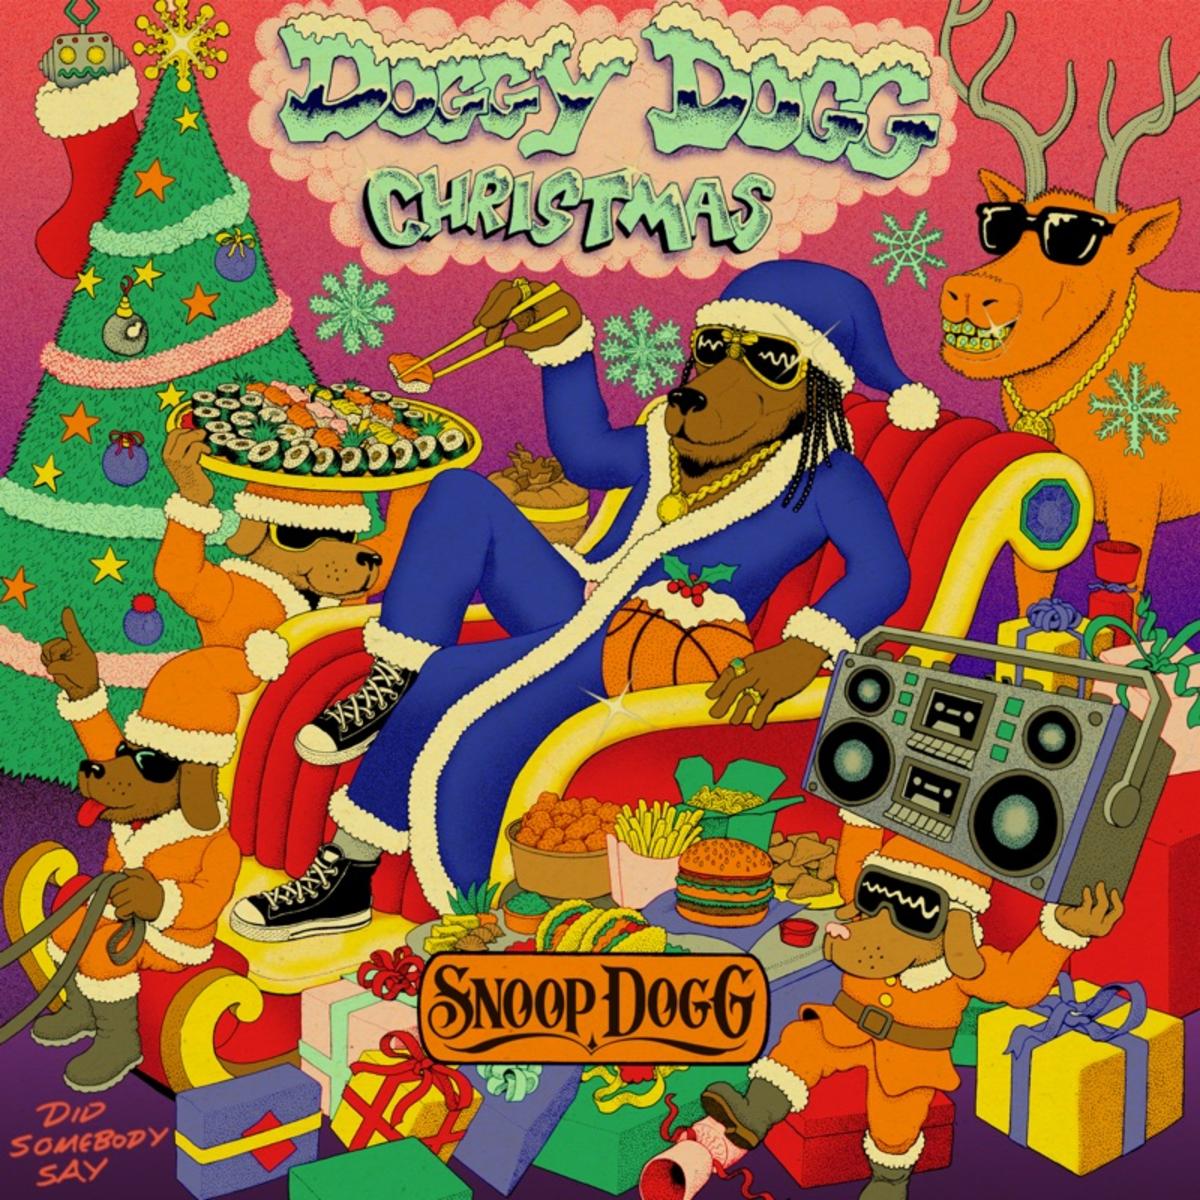 Doggy Dogg Christmas, Snoop Dogg te felicita la Navidad